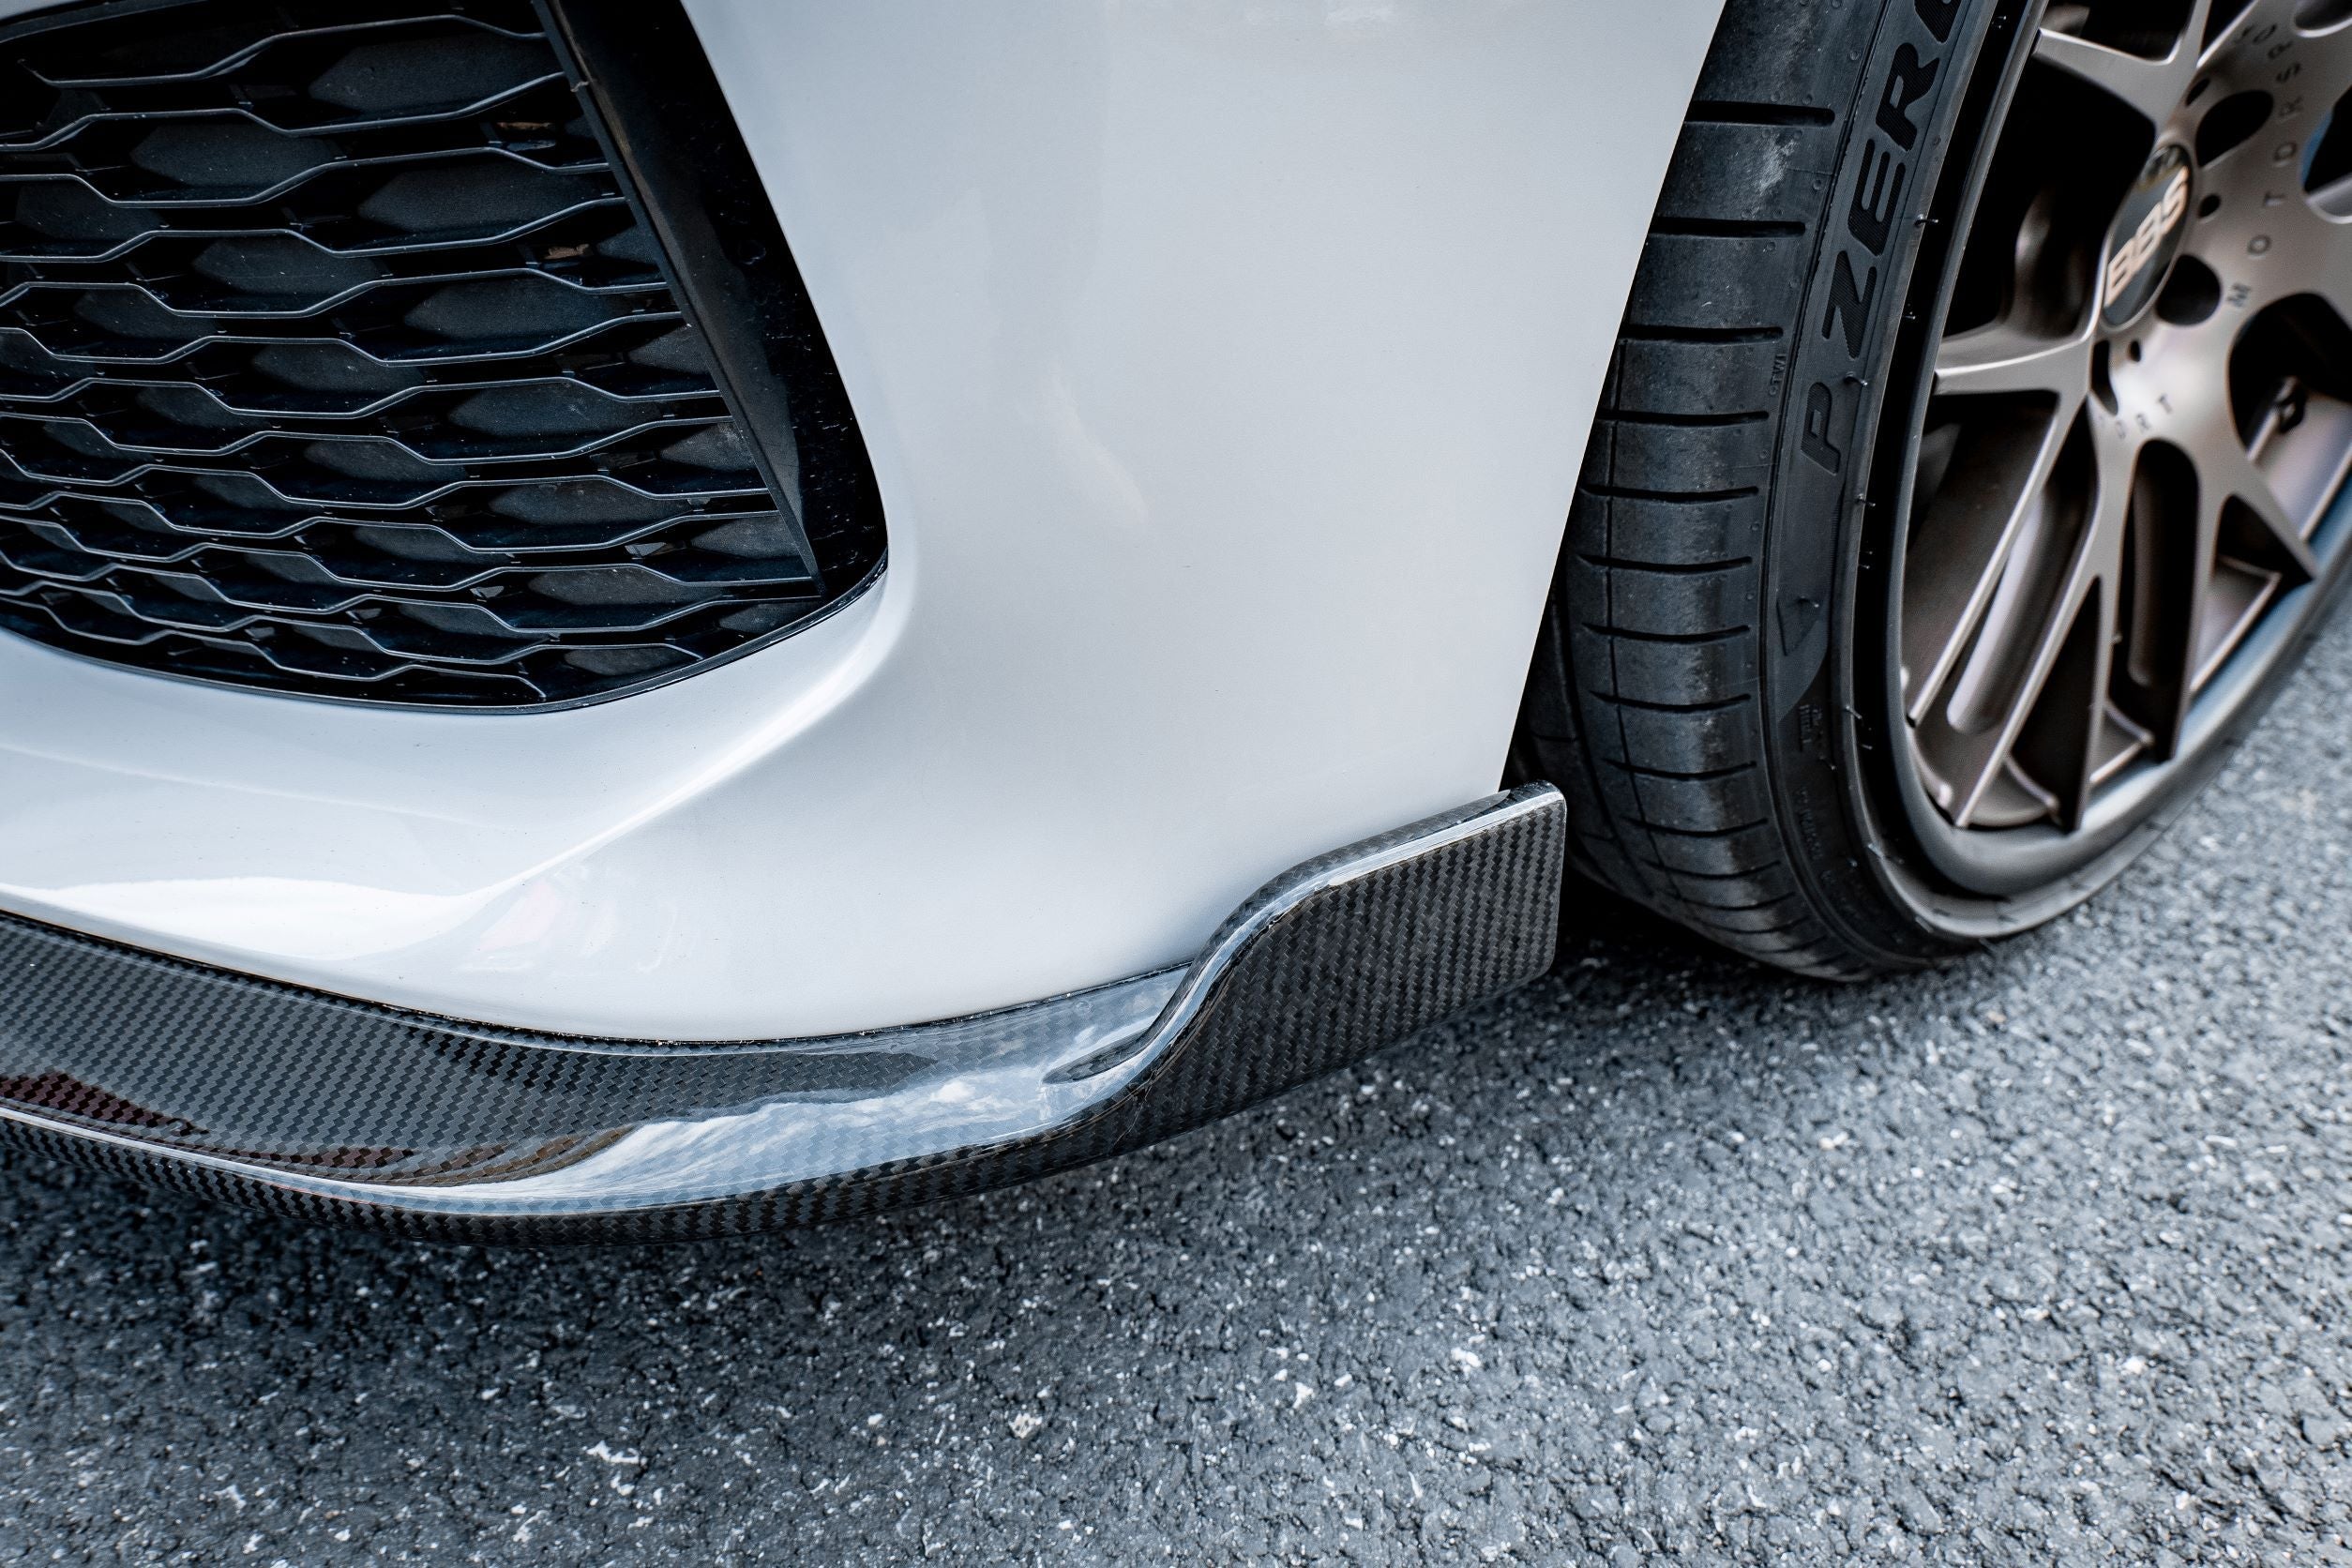 Karbel Carbon Dry Carbon Fiber Front Lip Splitter For BMW 8 Series G14 G15 G16 840i 850i Gran Coupe 4 Door Sedan 2 Door Coupe & Convertible